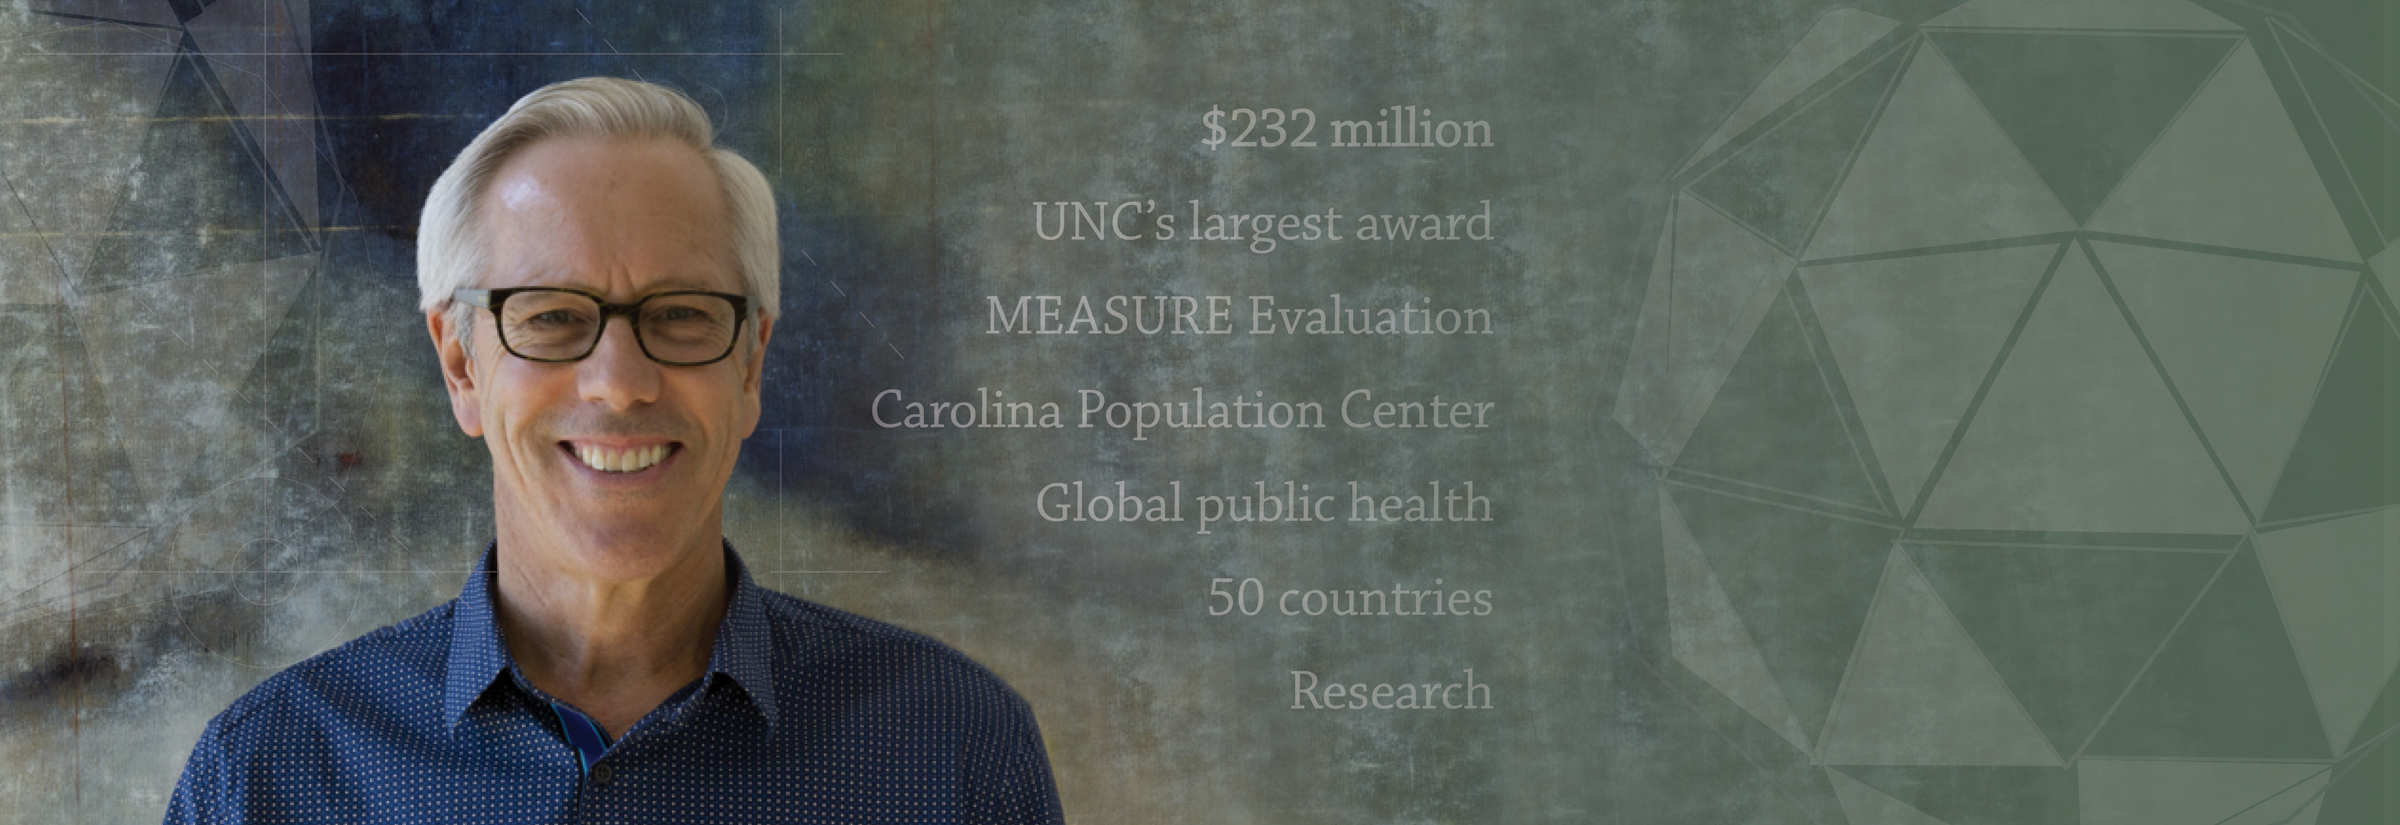 $232 million. UNC's largest award. MEASURE Evaluation. Carolina Population Center. 50 countries. Research.